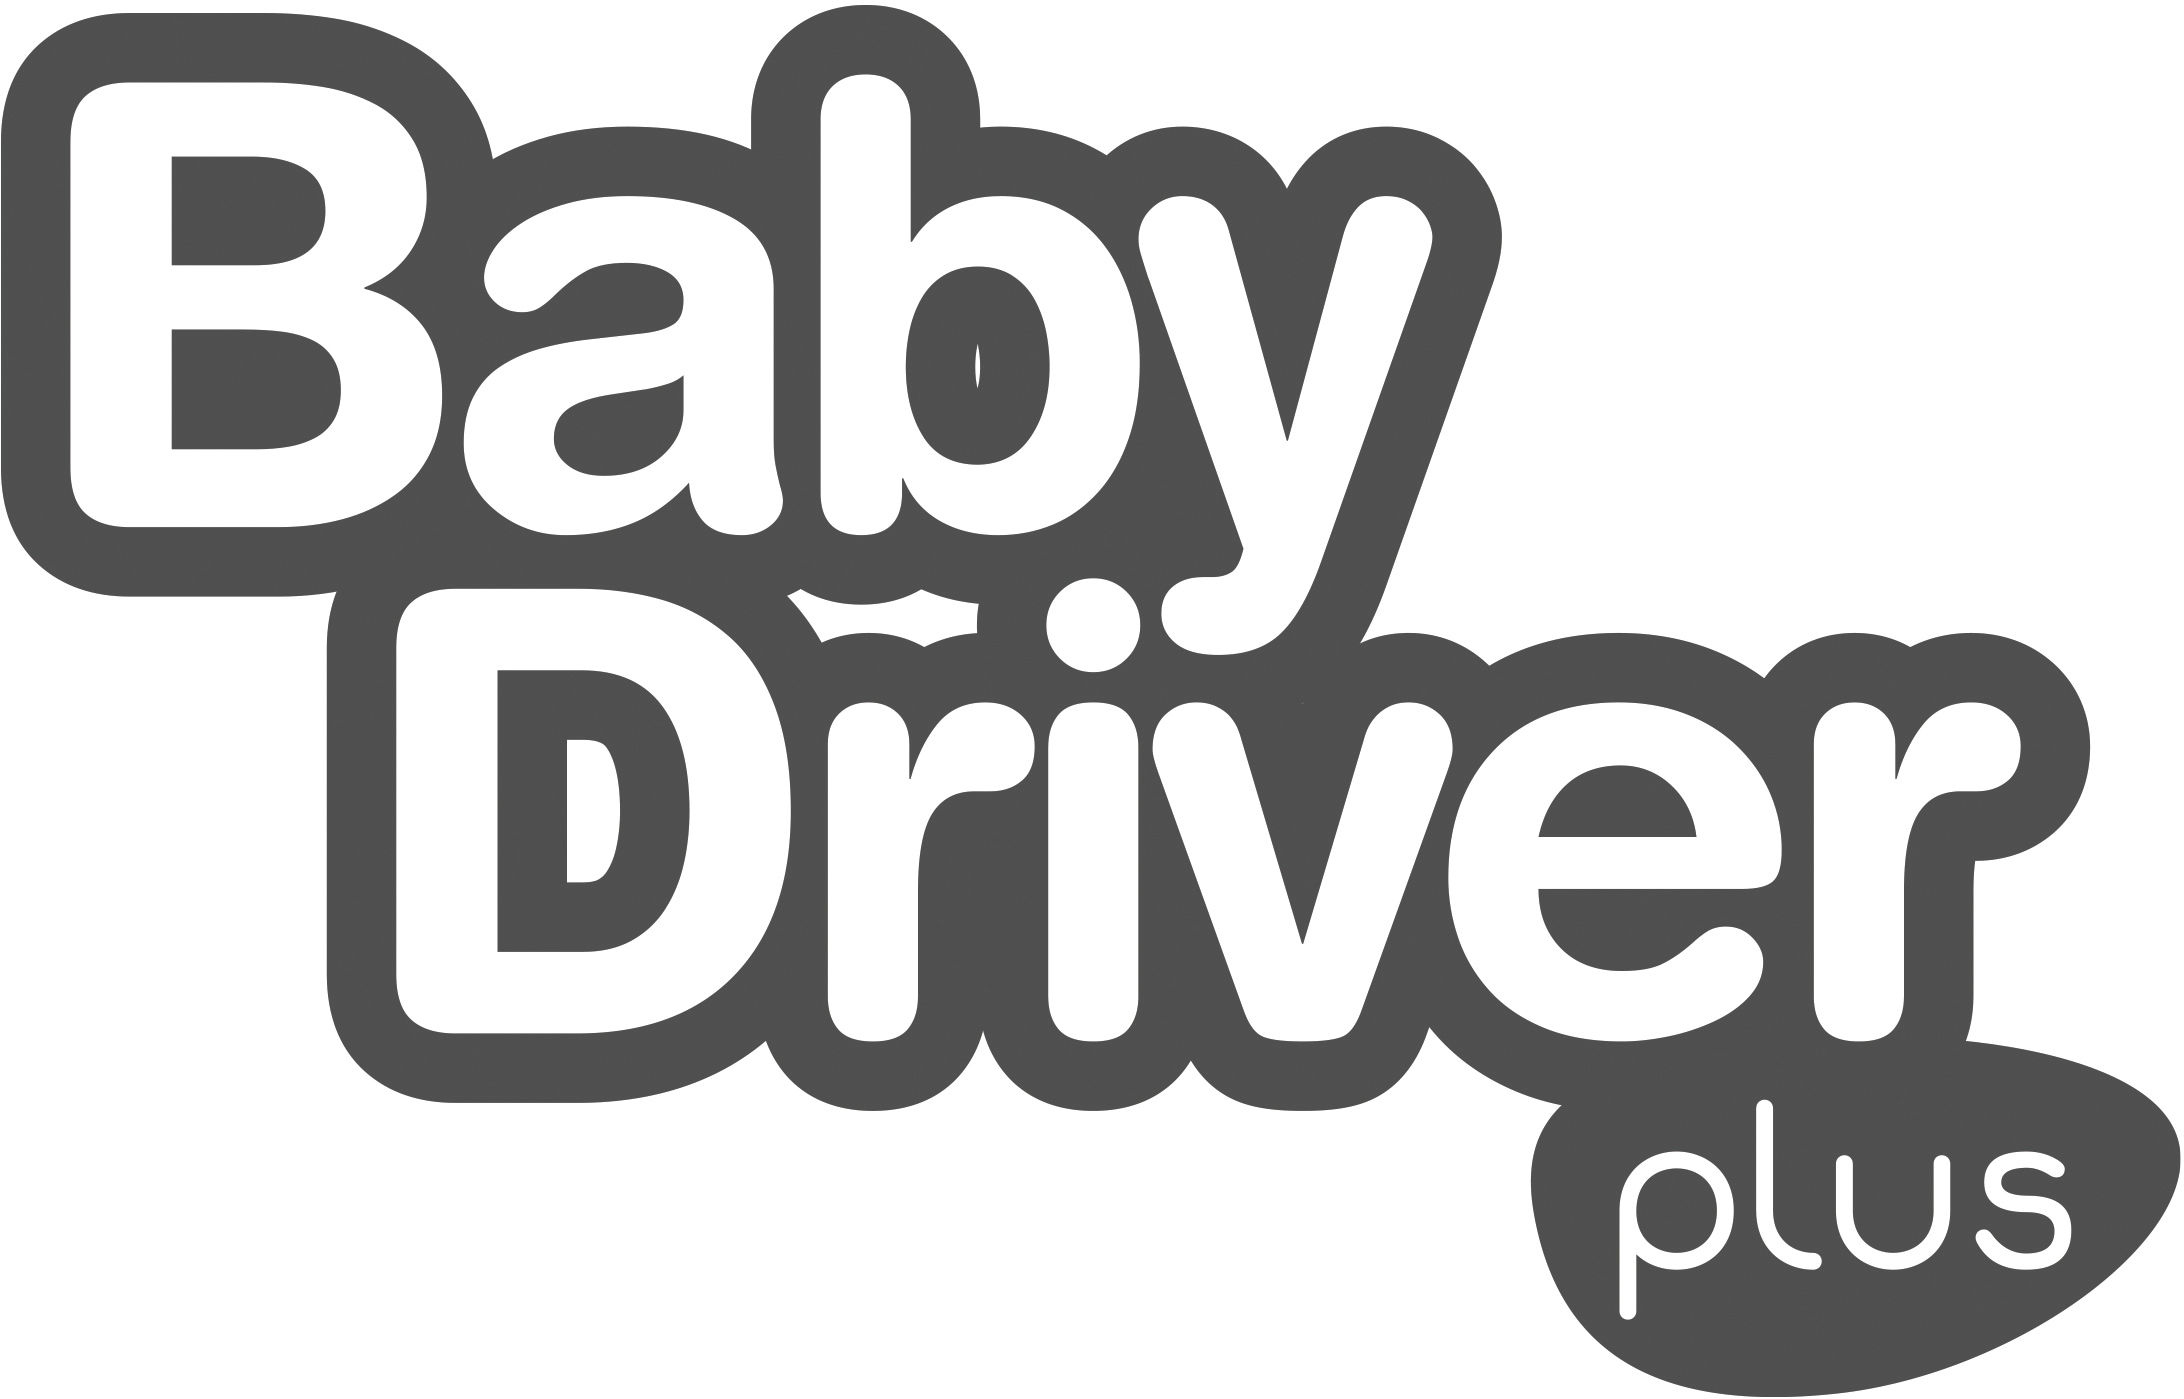 Smoby Dreirad »Baby Driver Plus, Grau«, Made in Europe